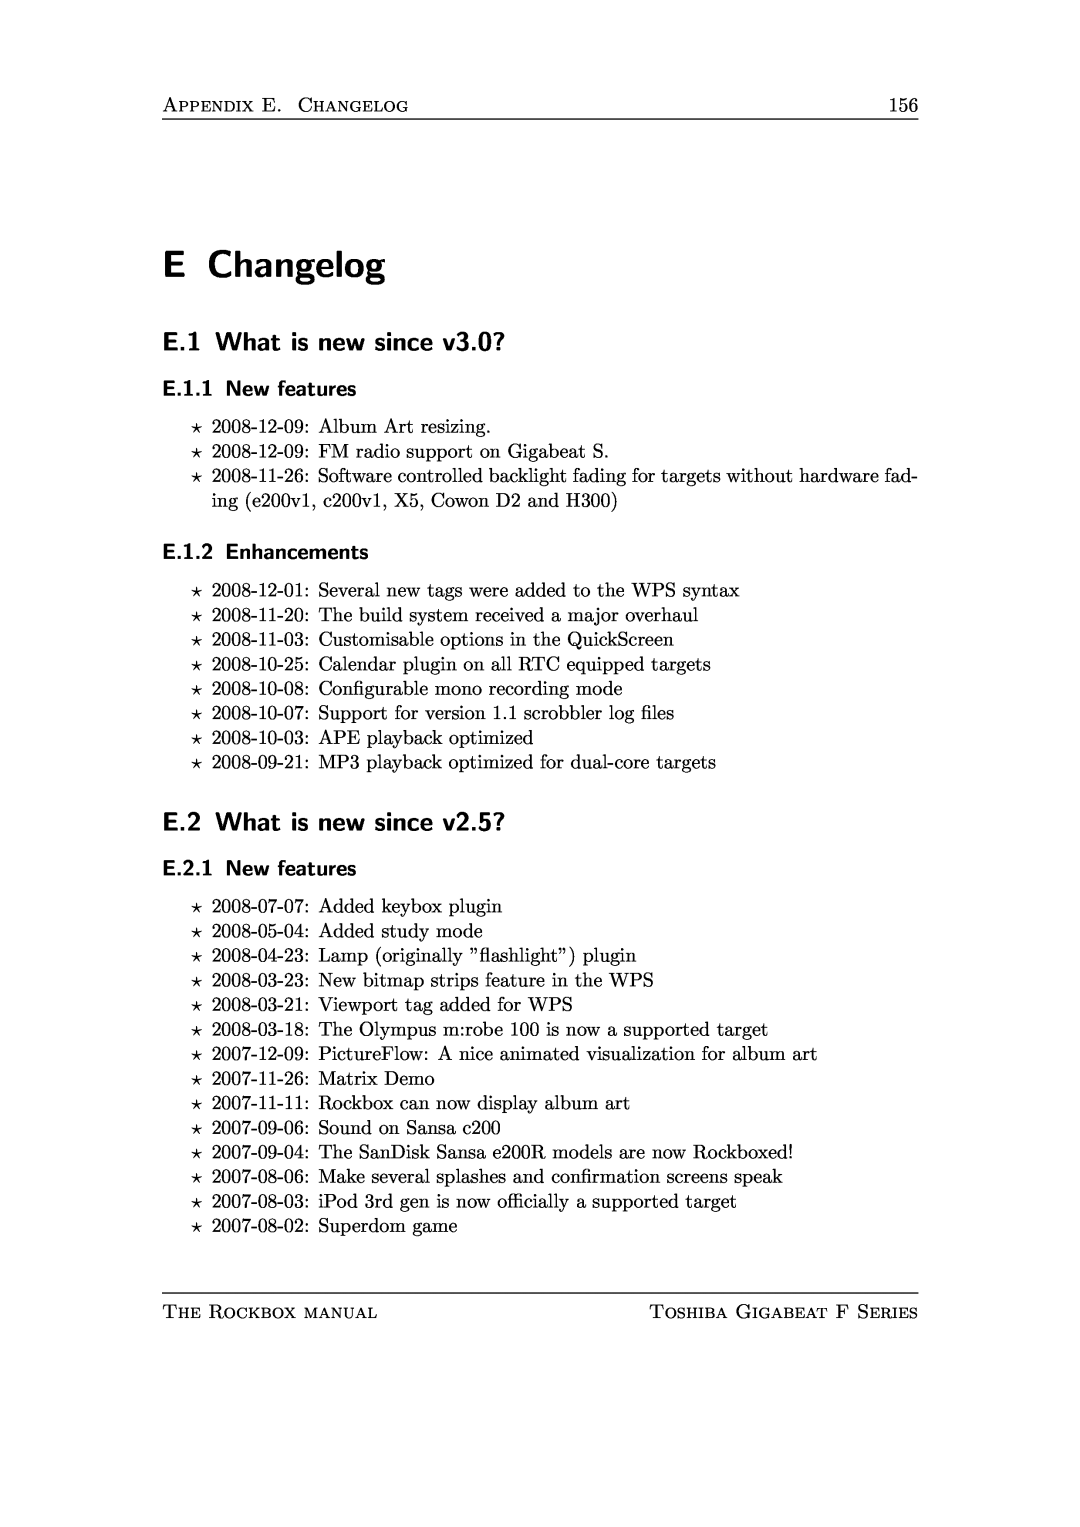 Toshiba F Series manual E Changelog, E.1 What is new since v3.0?, E.2 What is new since v2.5?, E.1.1 New features 